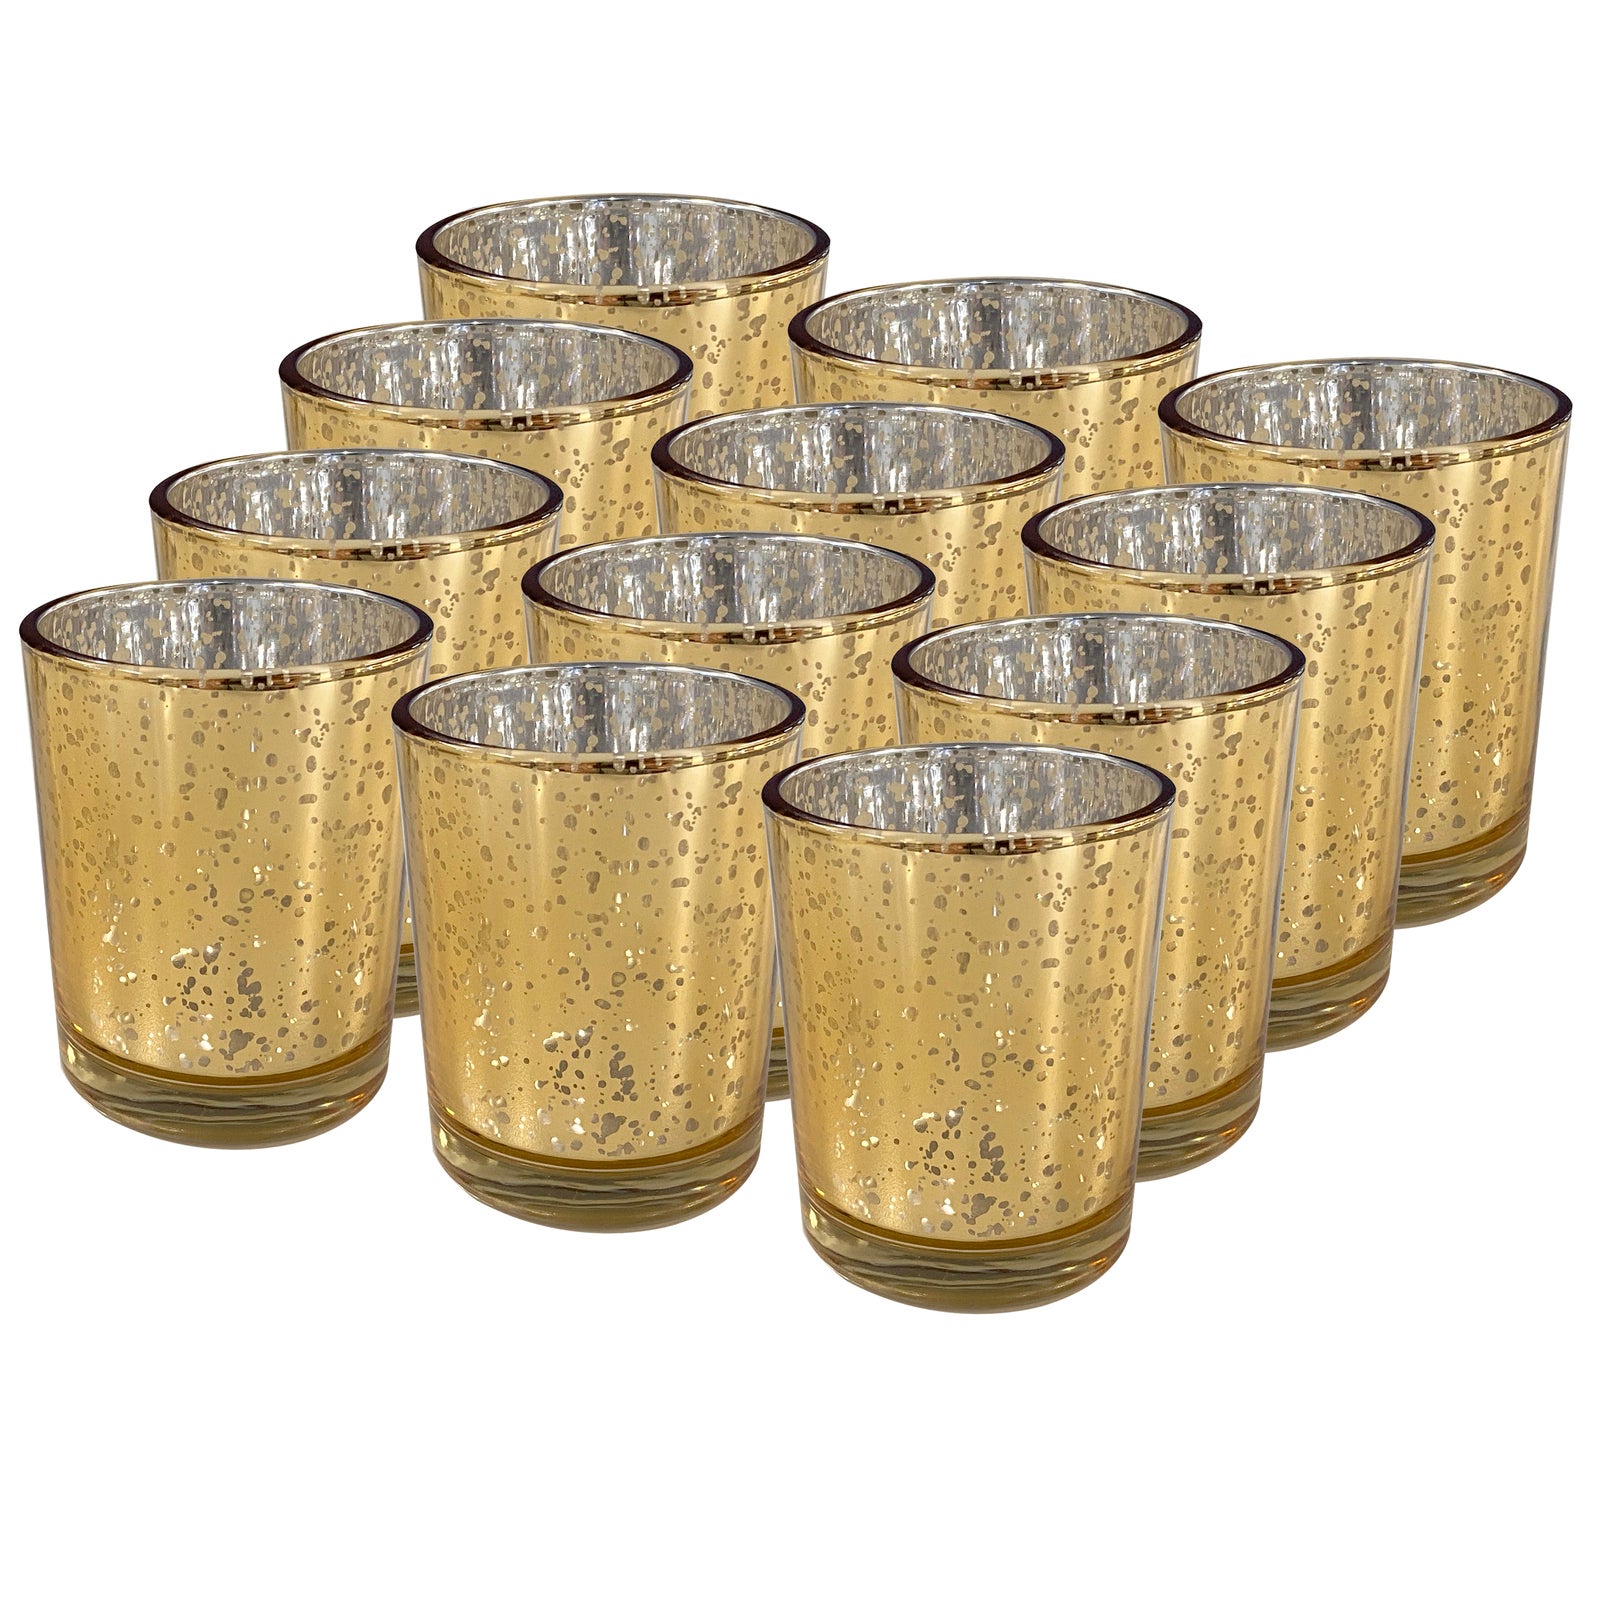 12pc Glass Tea Light Candle/Bomboniere Votive Round Holders Home Decor Gold